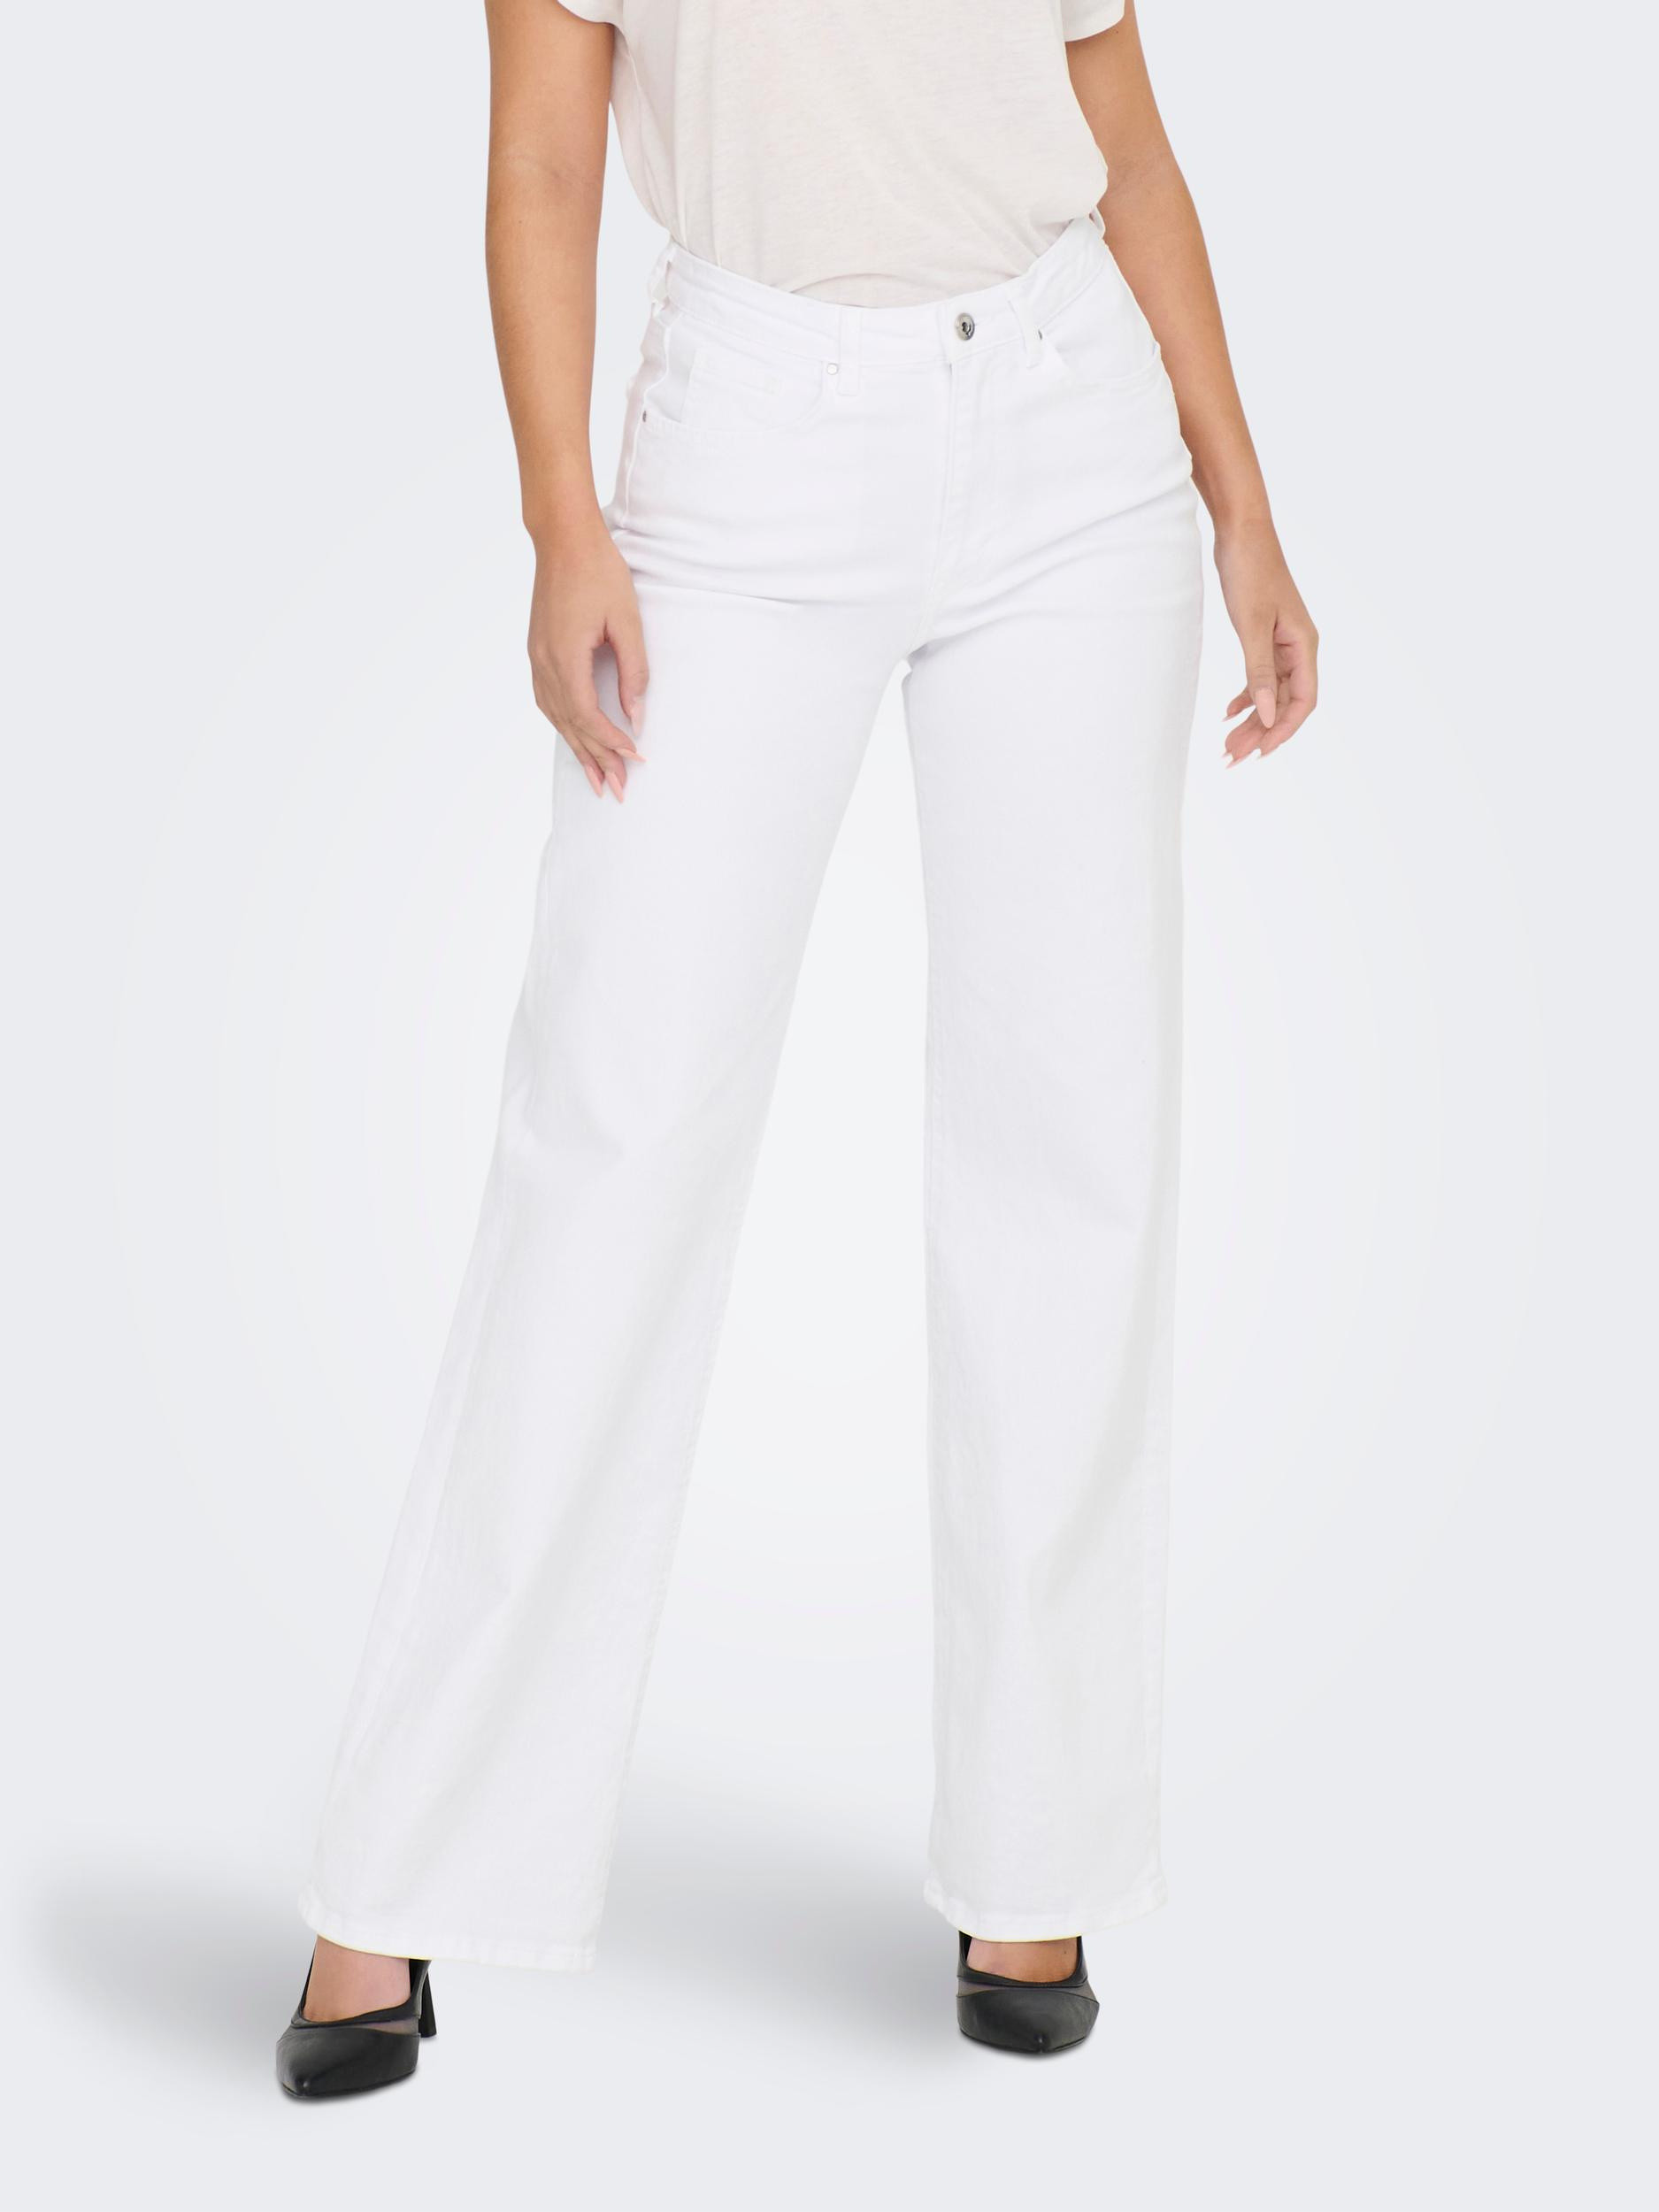 Only - Five pocket jeans, White, large image number 4